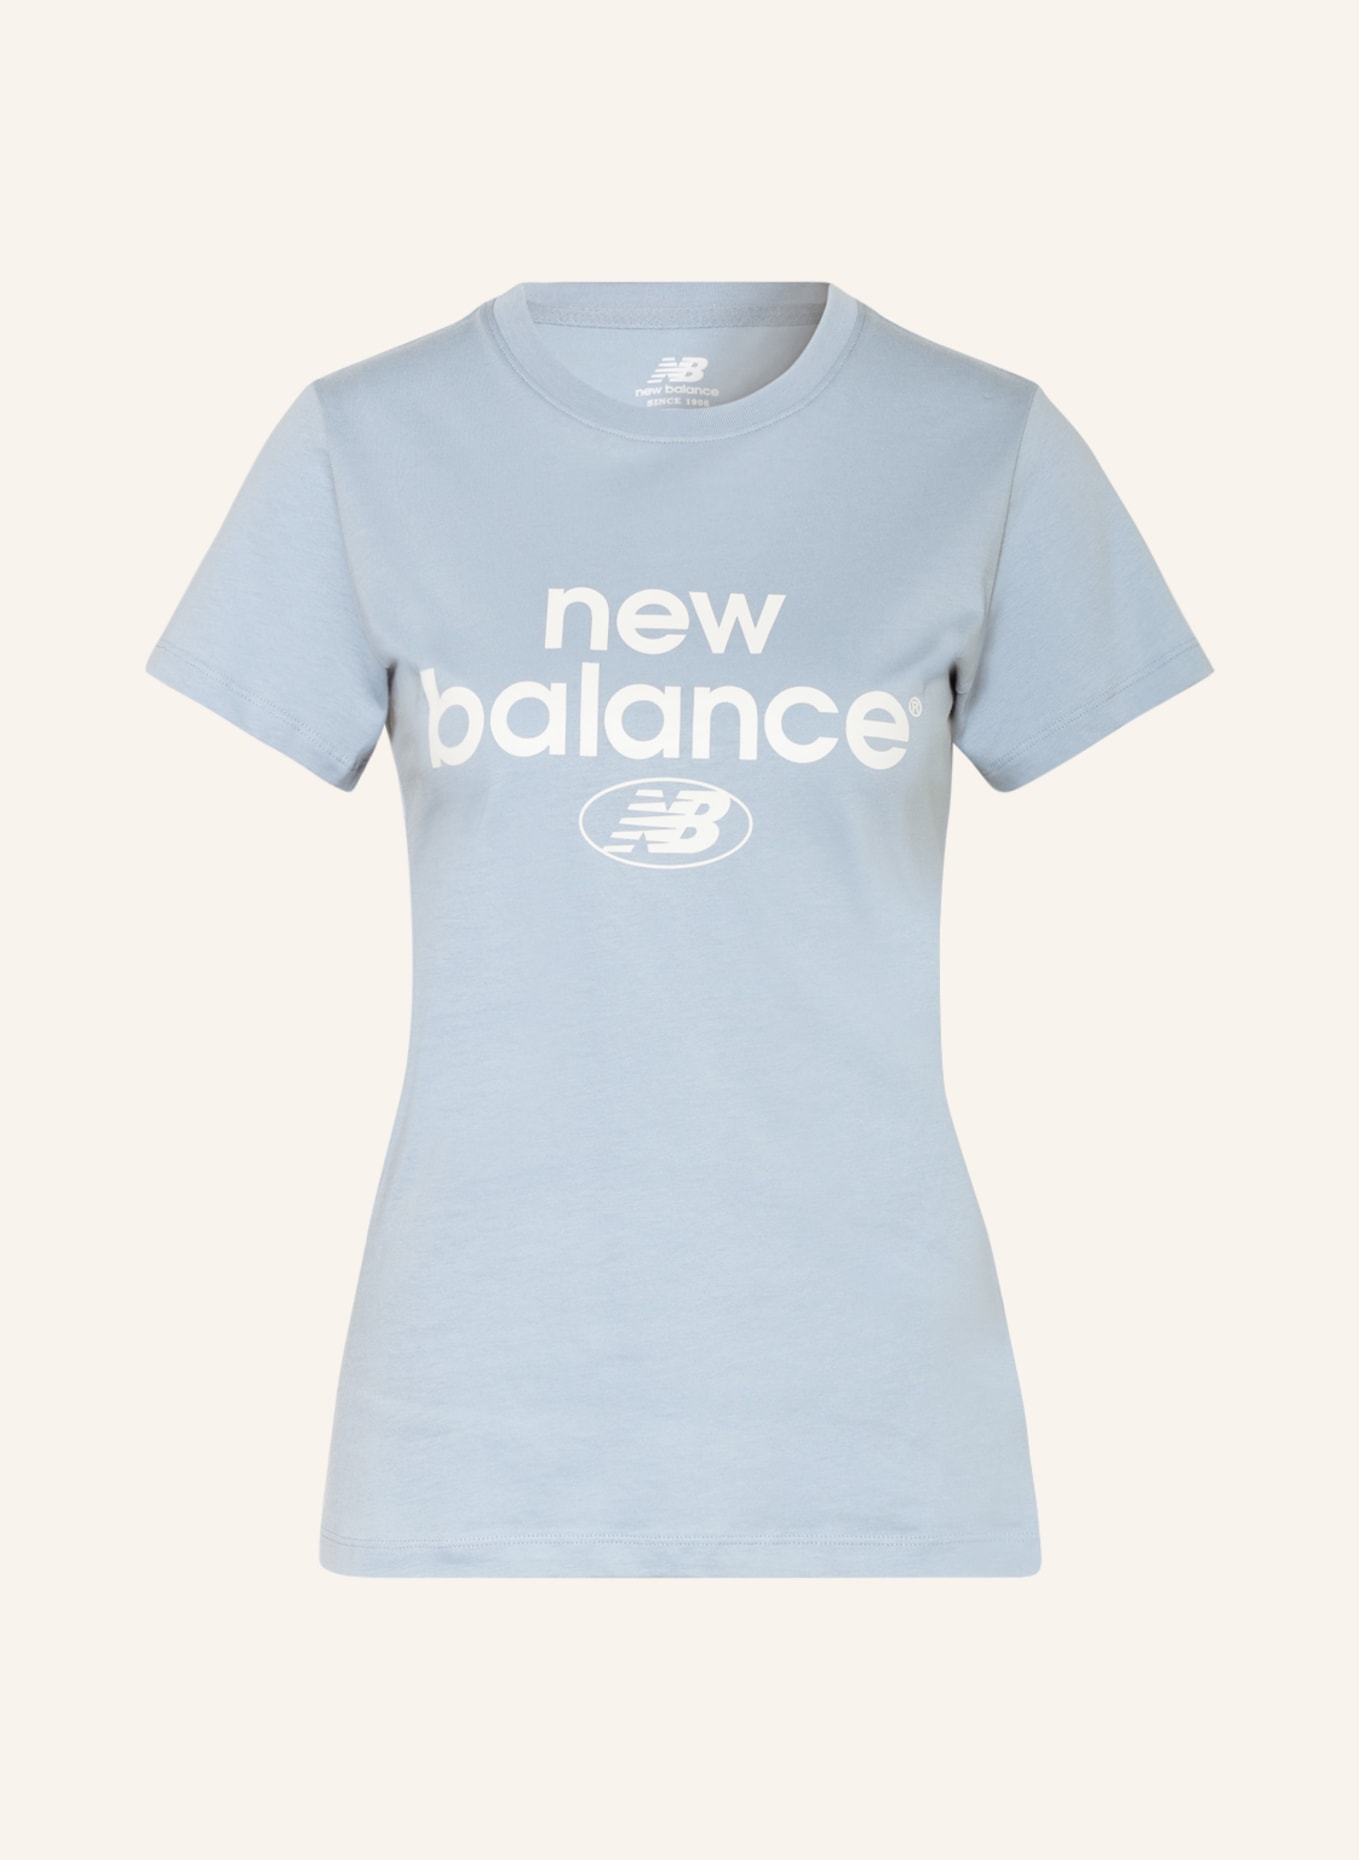 in white light T-shirt blue/ new ESSENTIALS balance